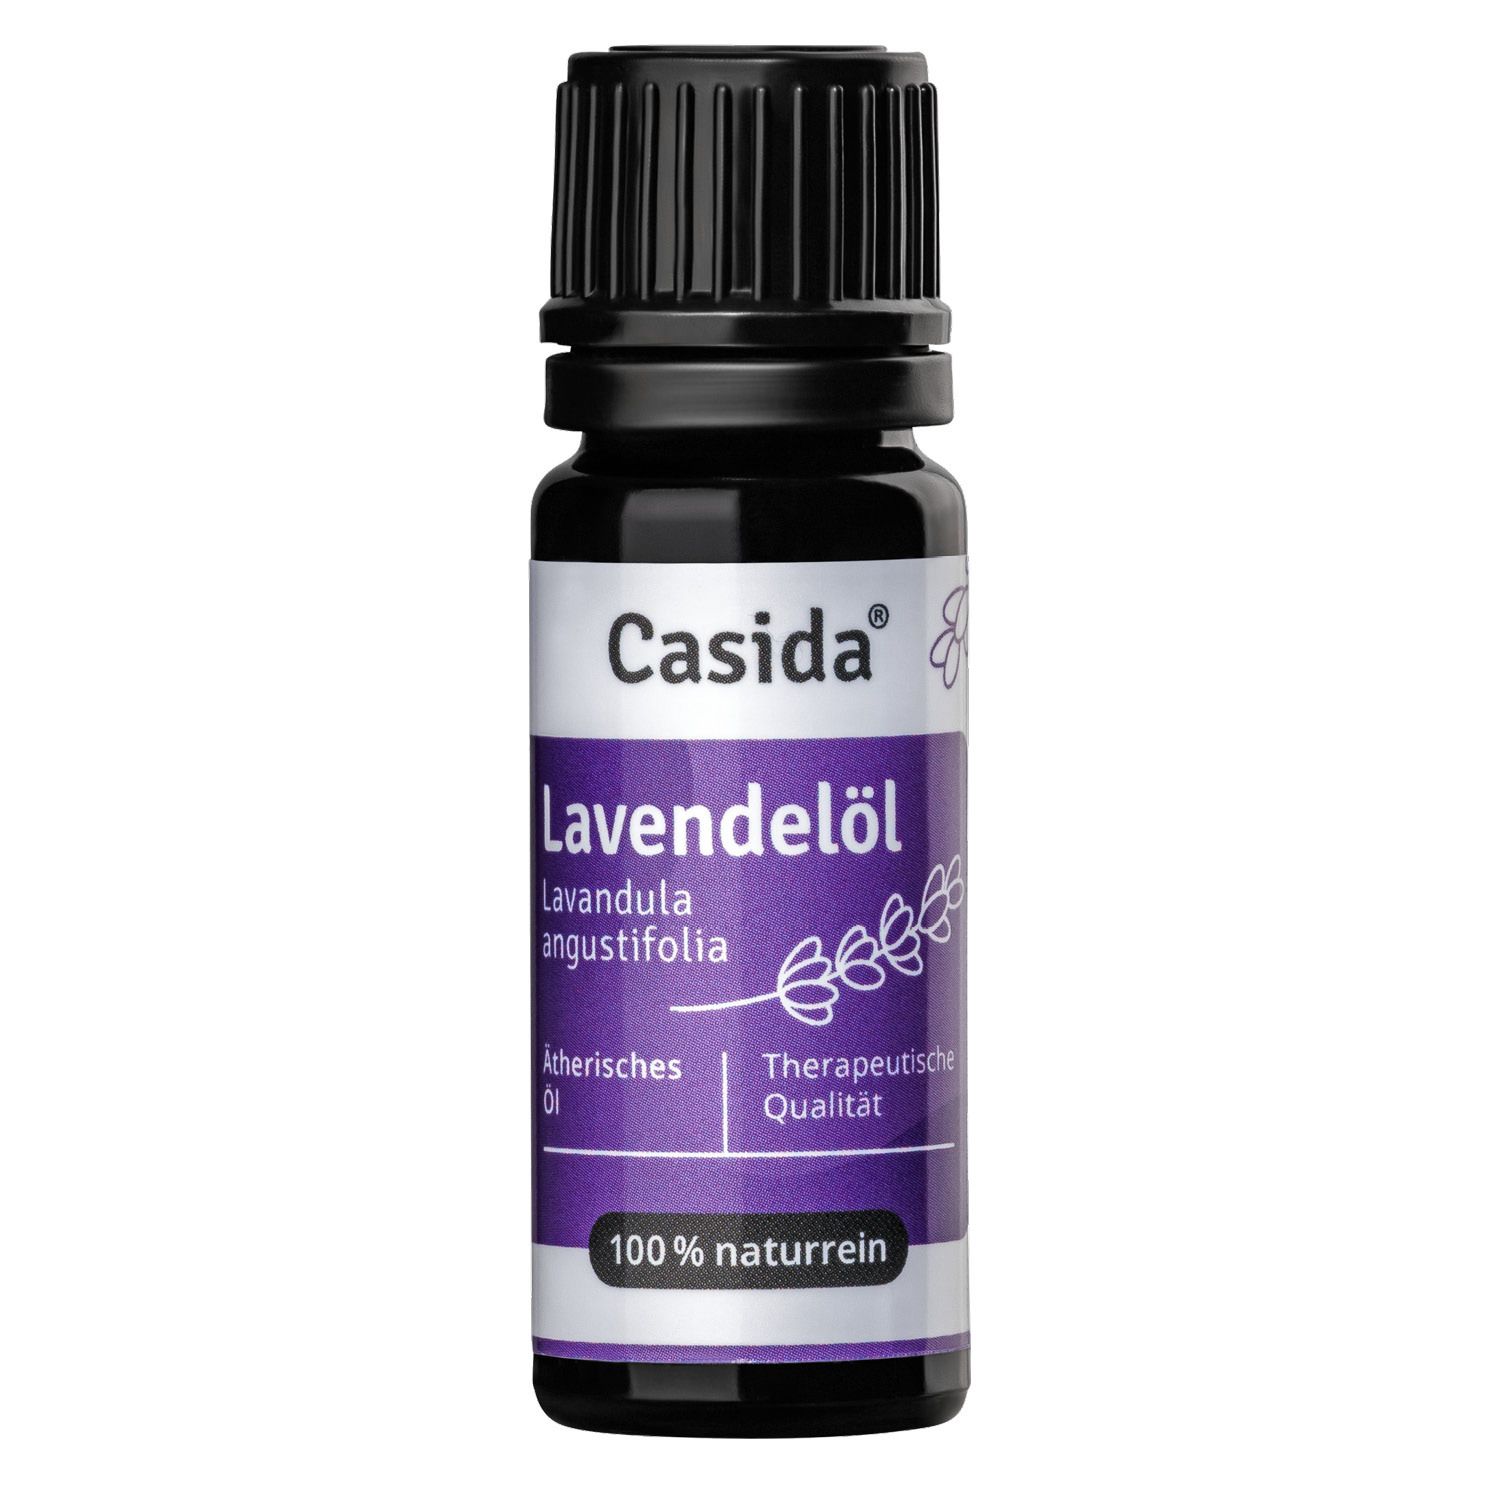 Image of Casida Lavendelöl